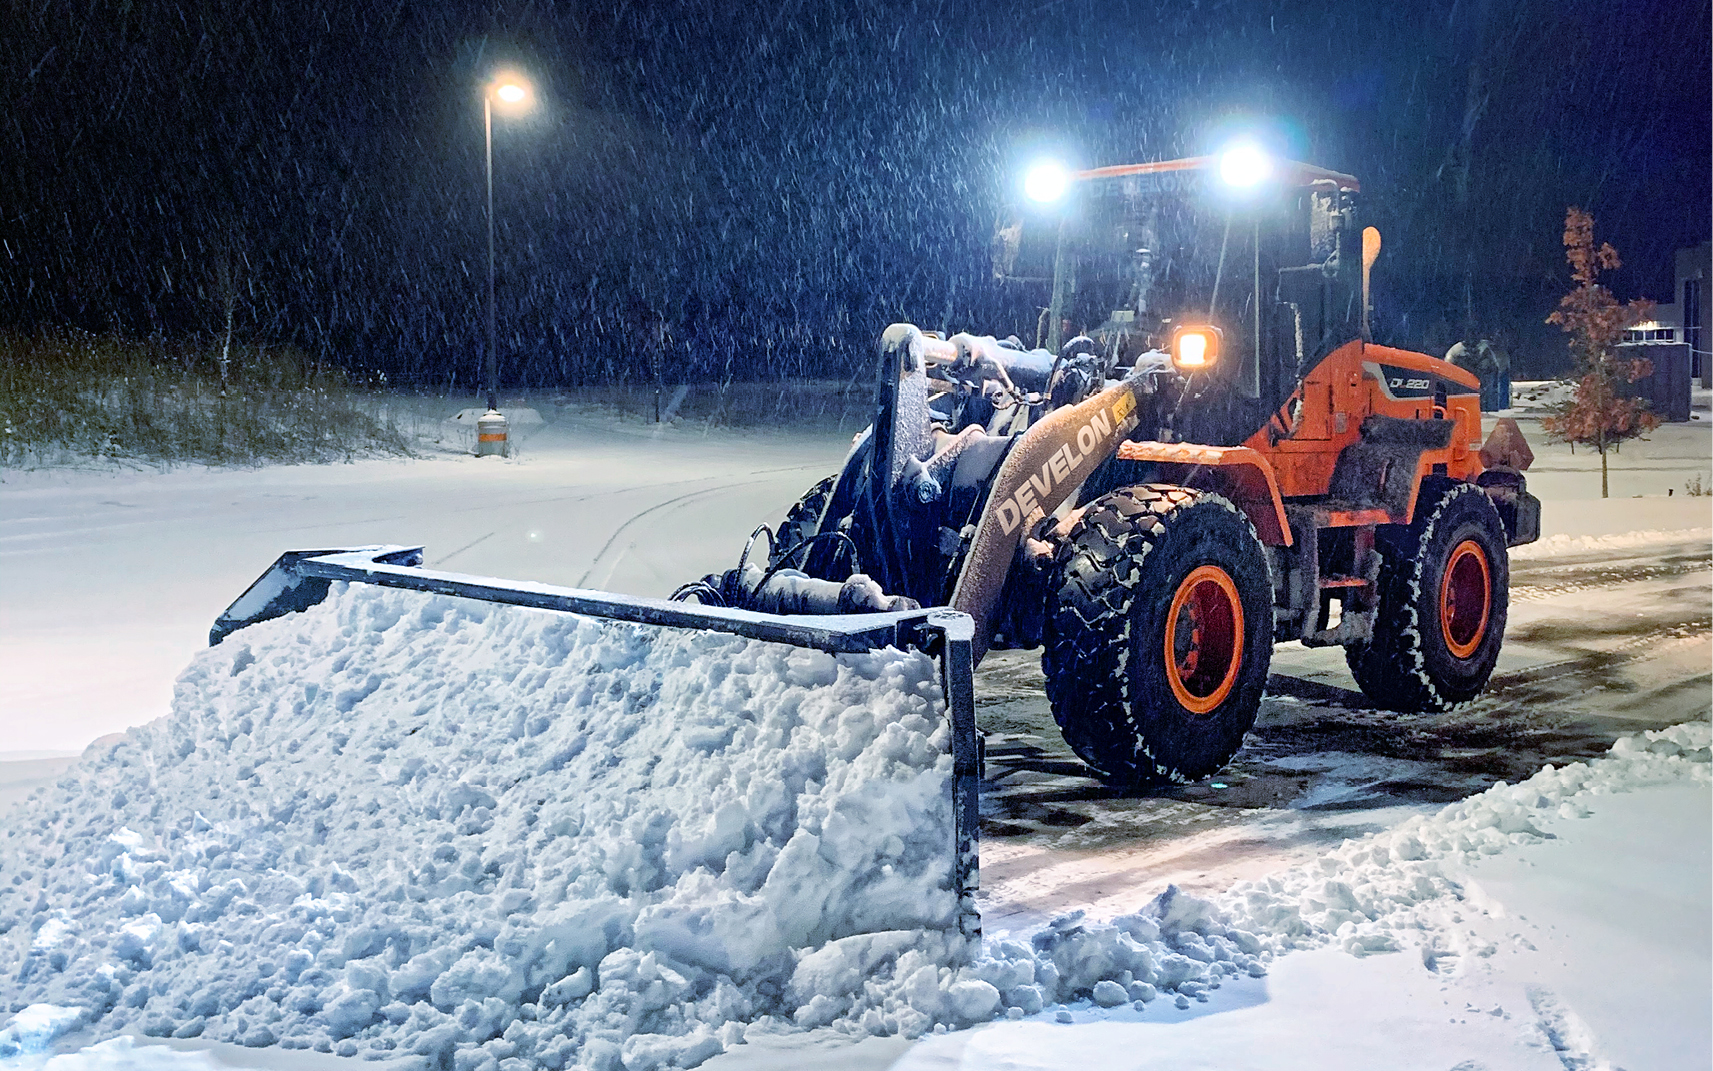 A DEVELON DL220 wheel loader pushing snow at night.